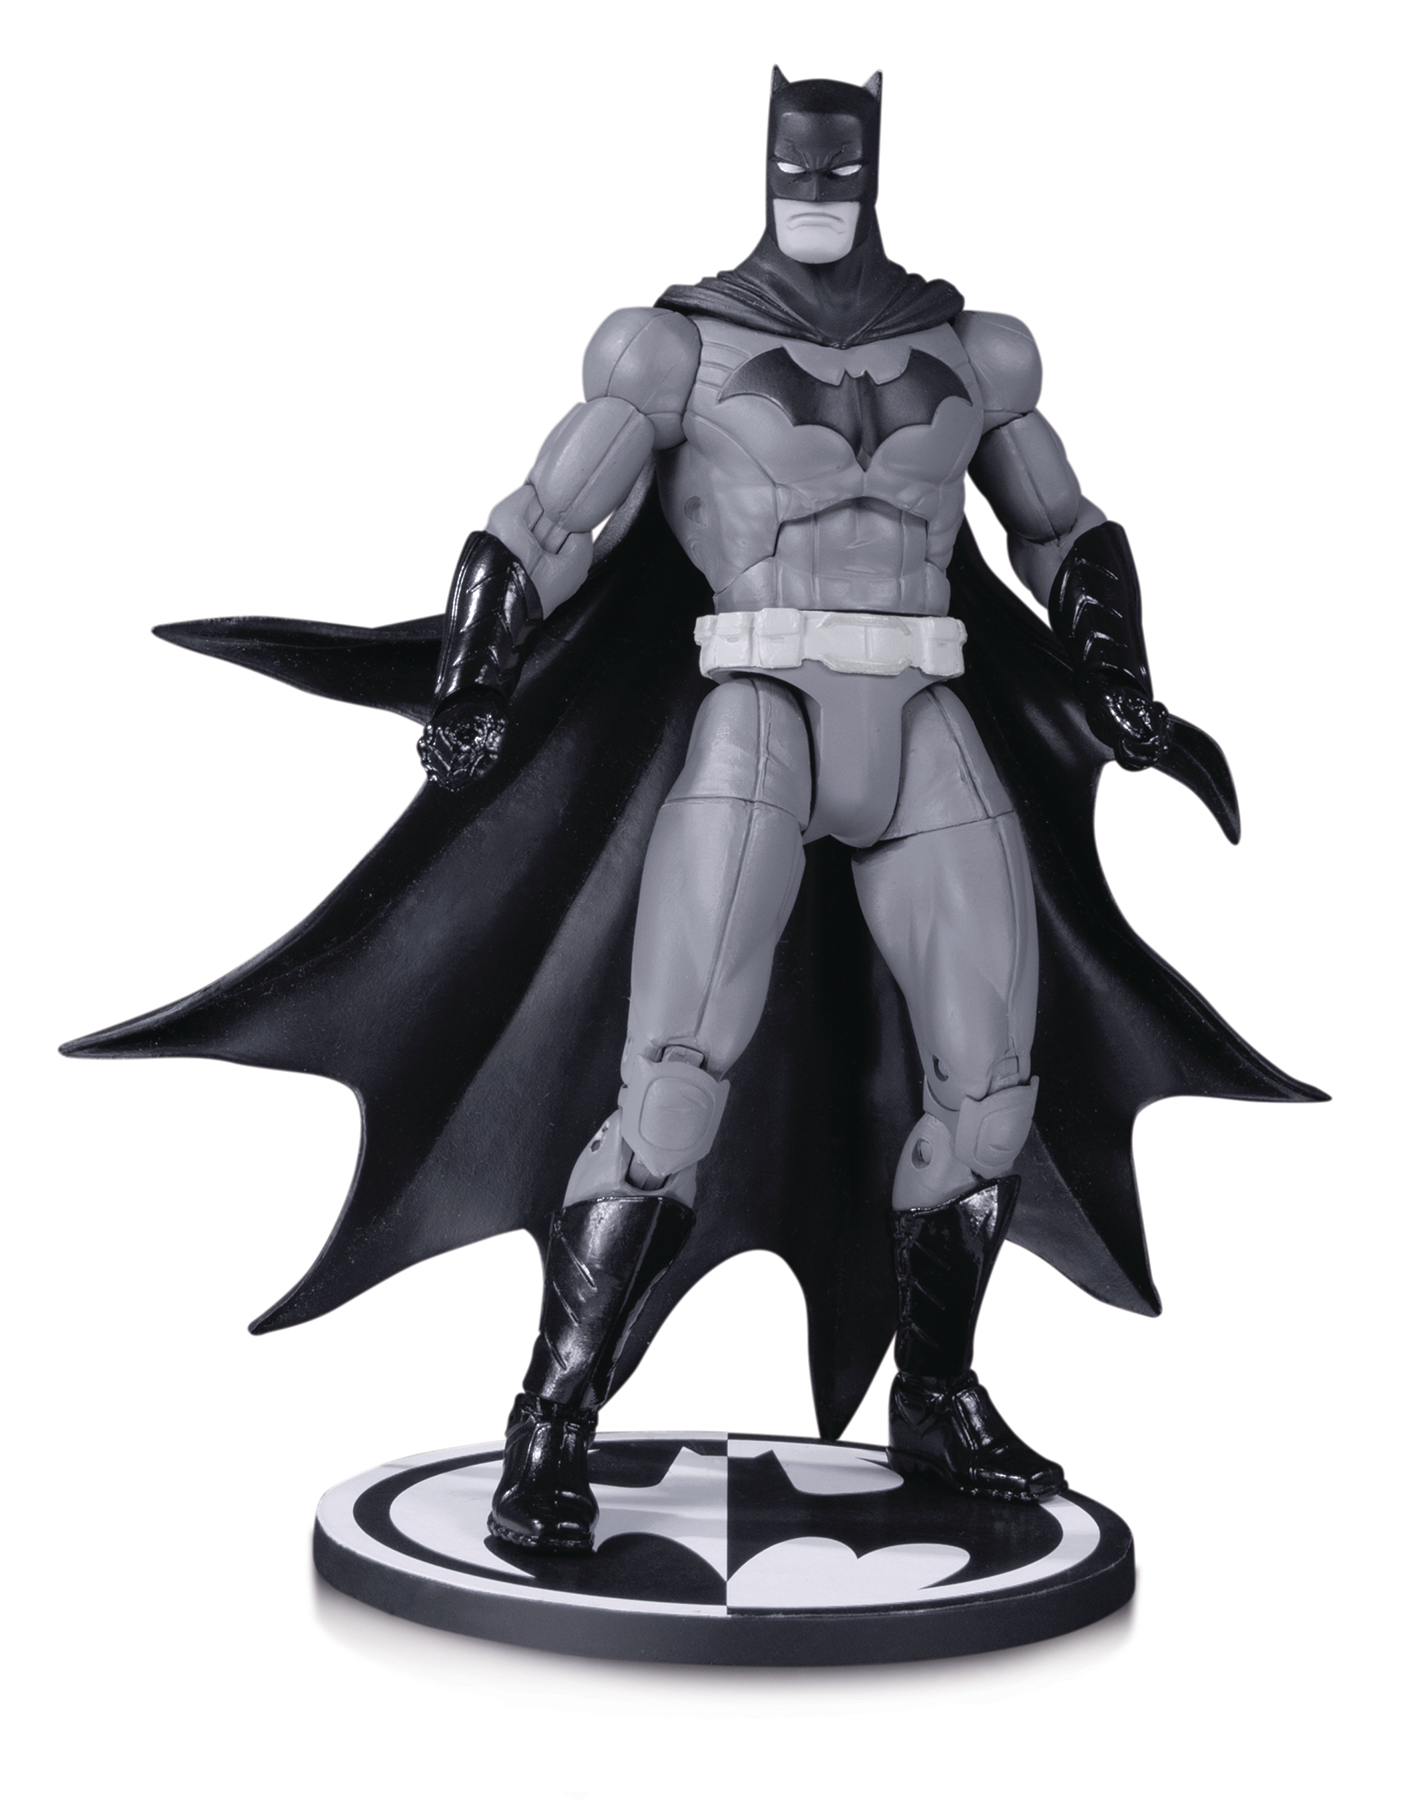 Dc Comics 1st Appearance Bob Kane Batman Black and White Figure 